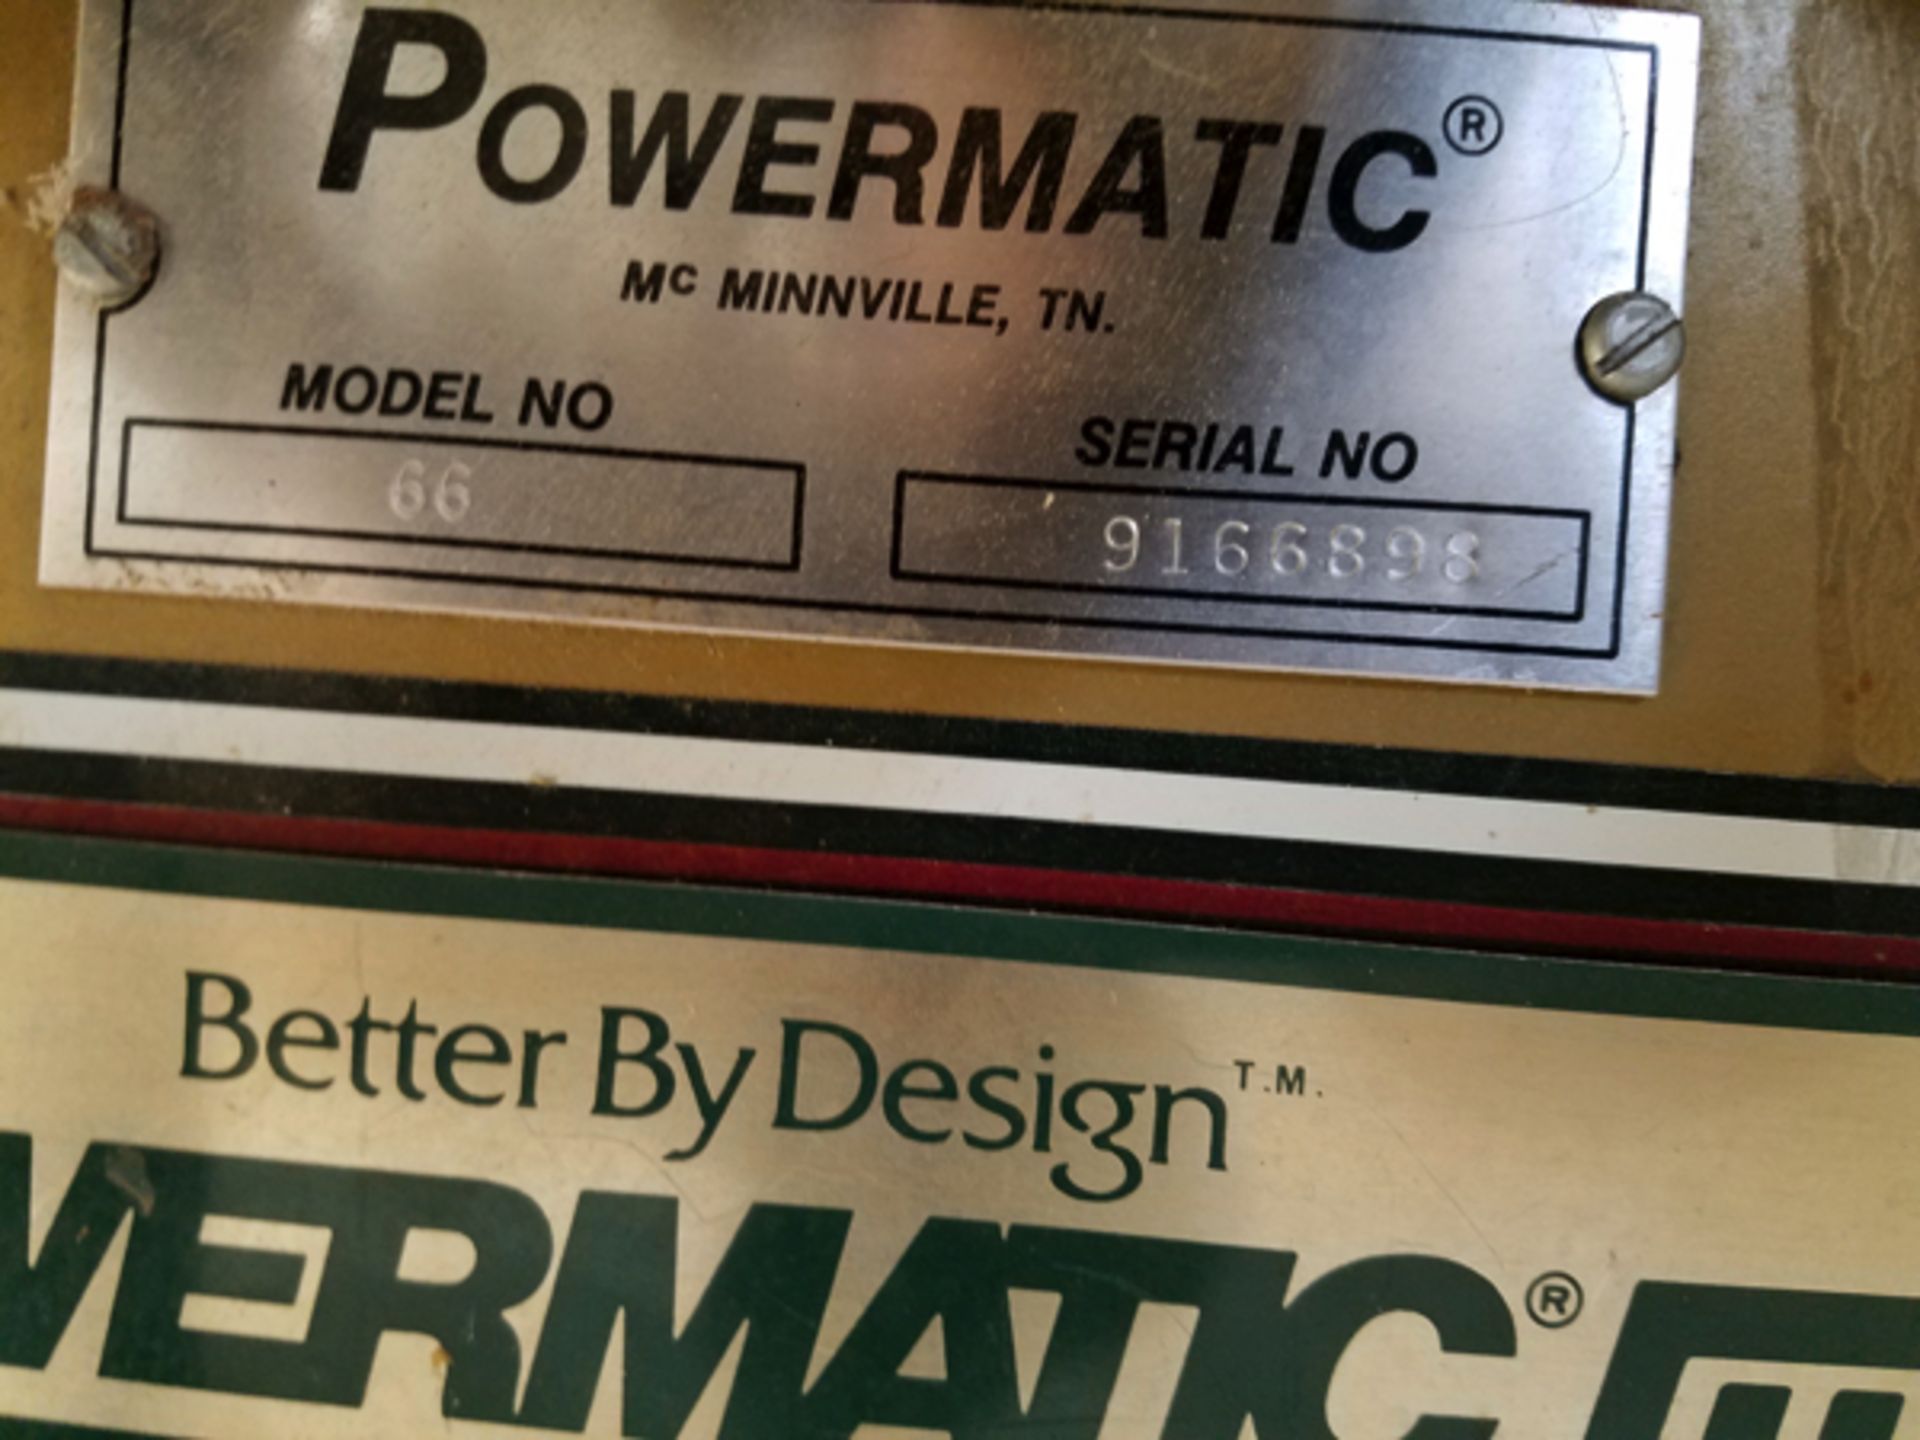 Powermatic Table Saw, M# 66, S/N 9166898 | Rigging Price: $110 - Image 2 of 2